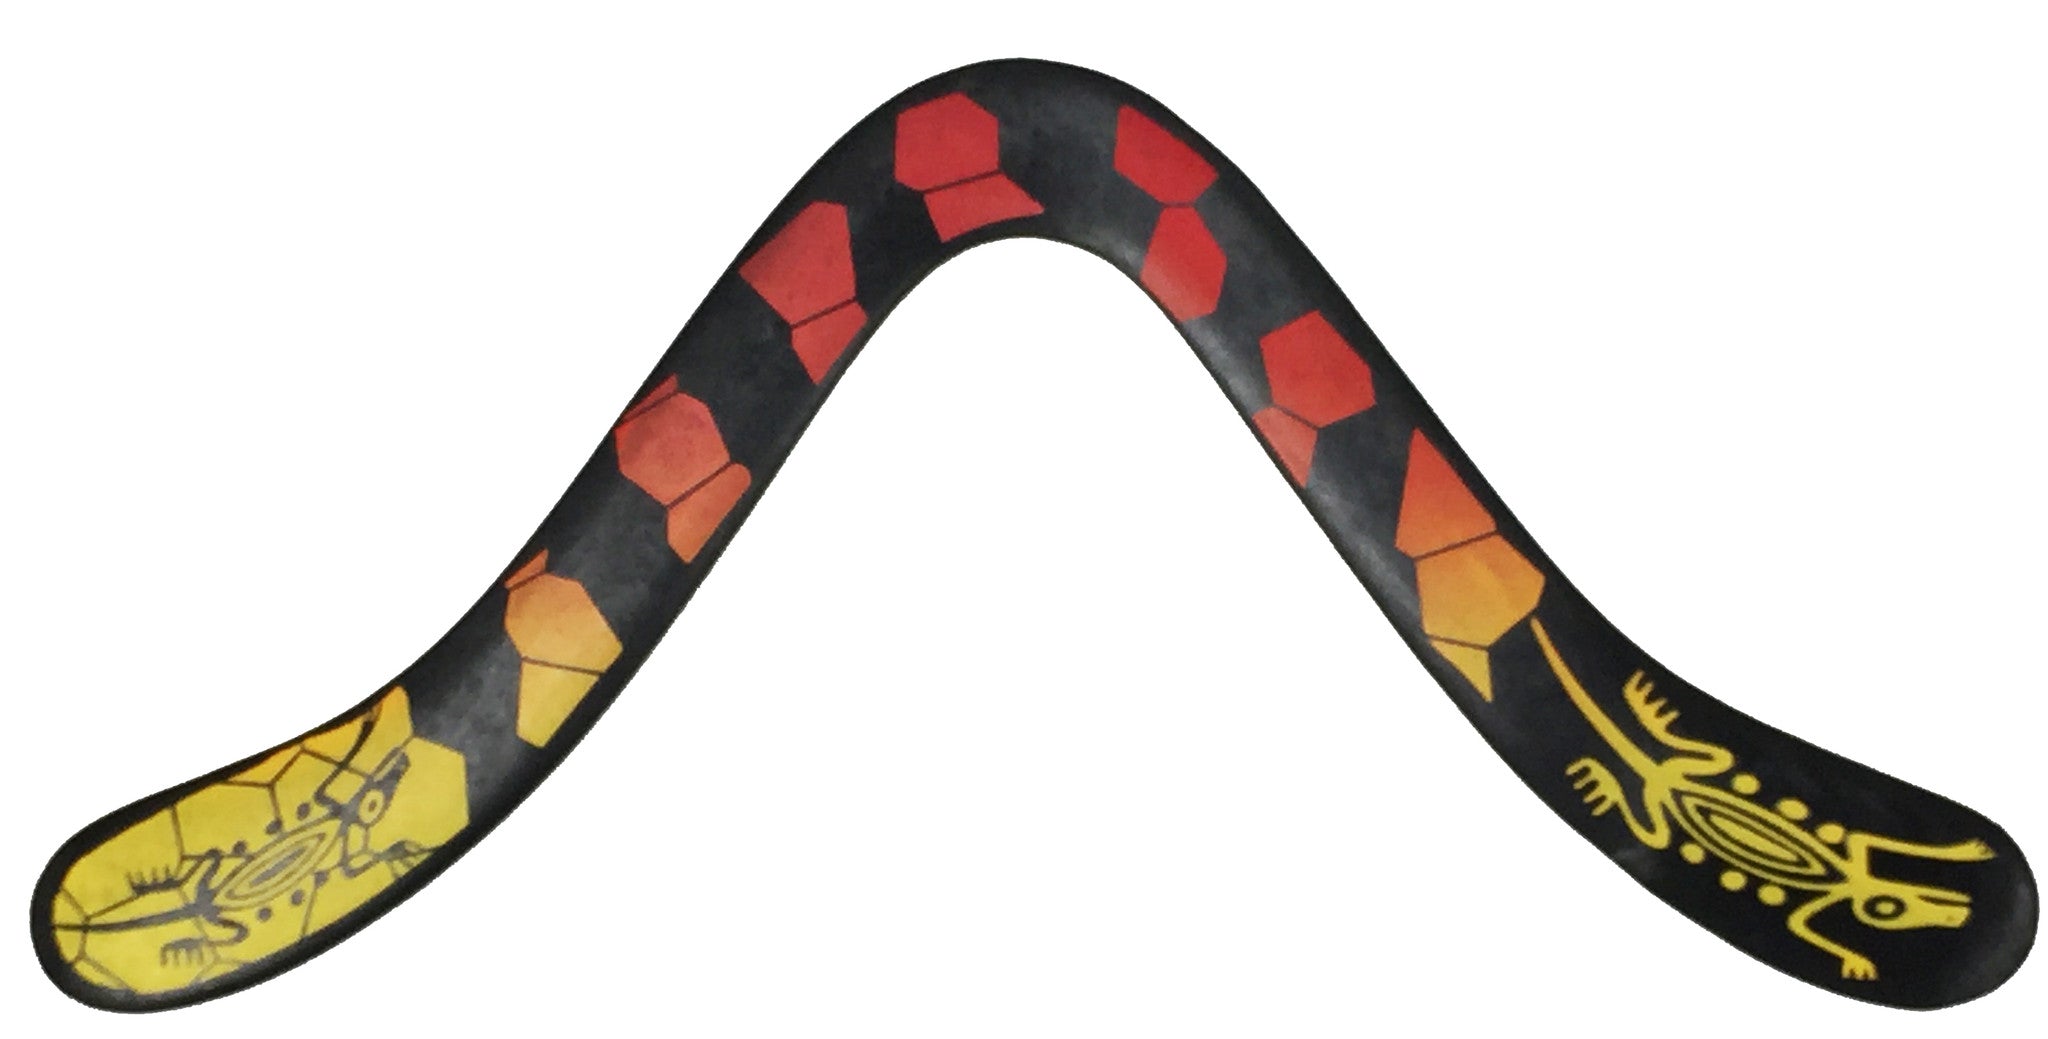 Technic Fossil - Carbon Fiber / Plastic Composite Boomerang RH - boomerangs-com